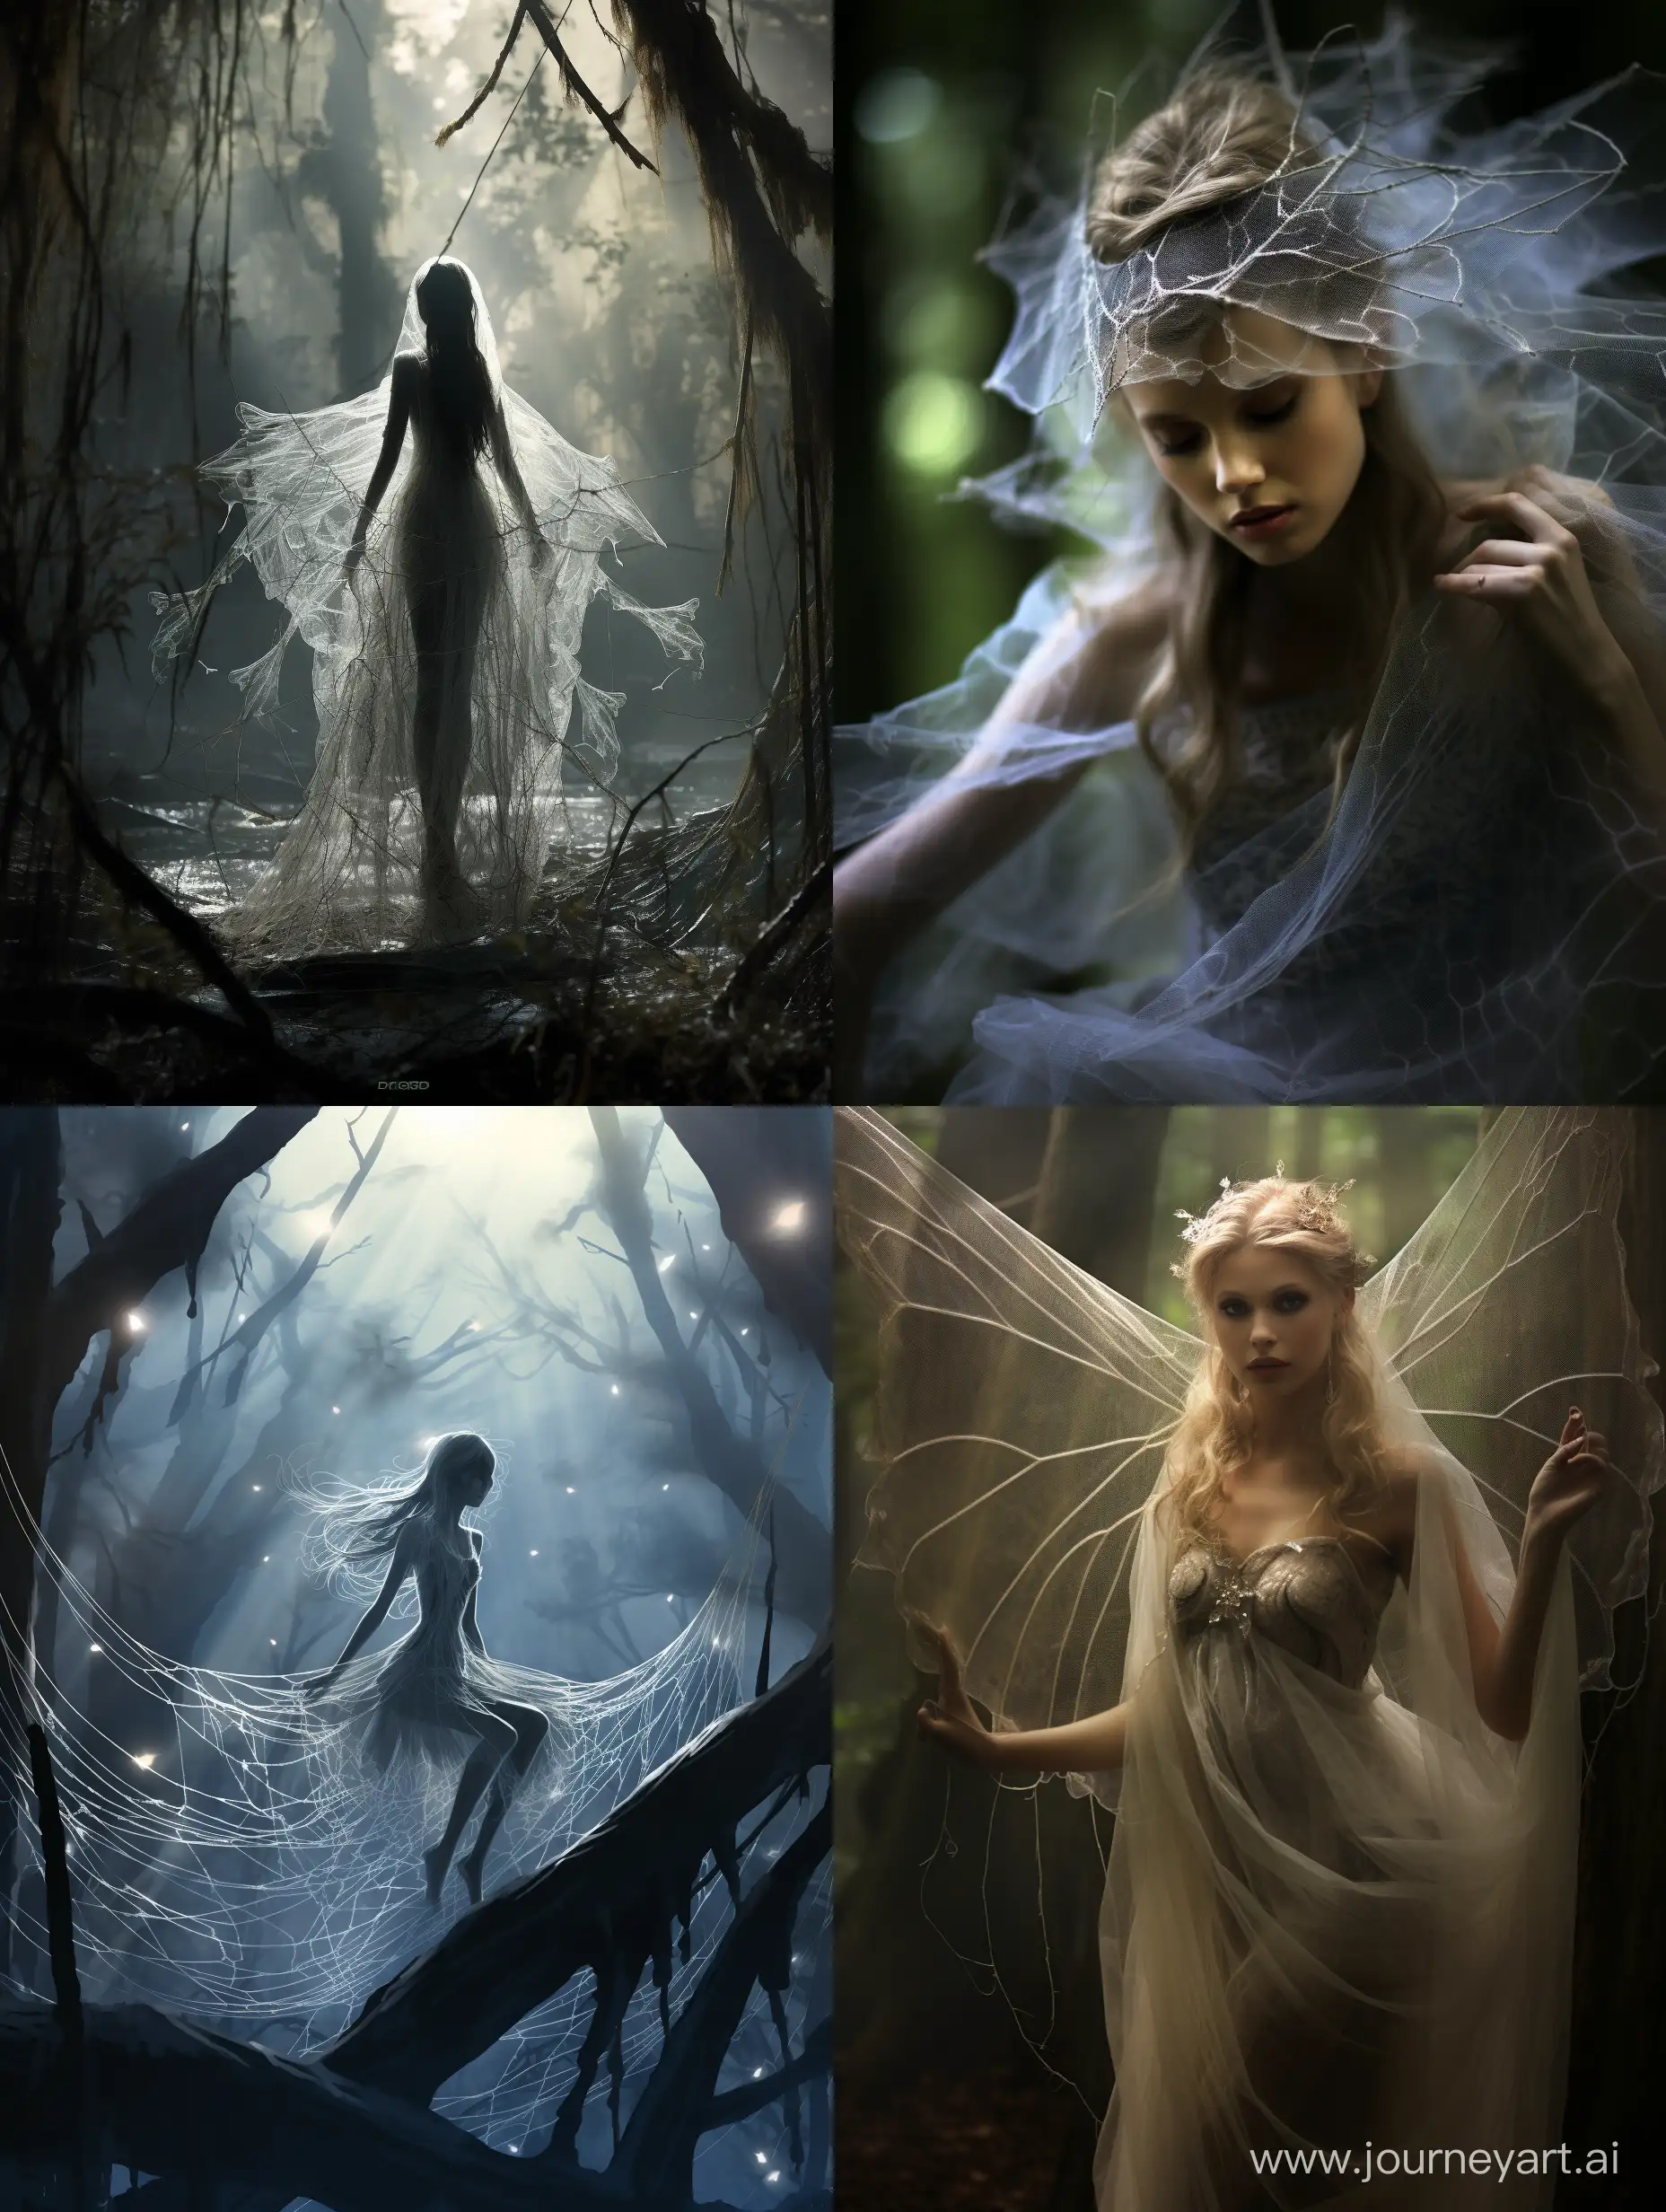 Enchanting-Fairy-Trapped-in-Web-of-Shadows-Dramatic-Film-Noir-Fantasy